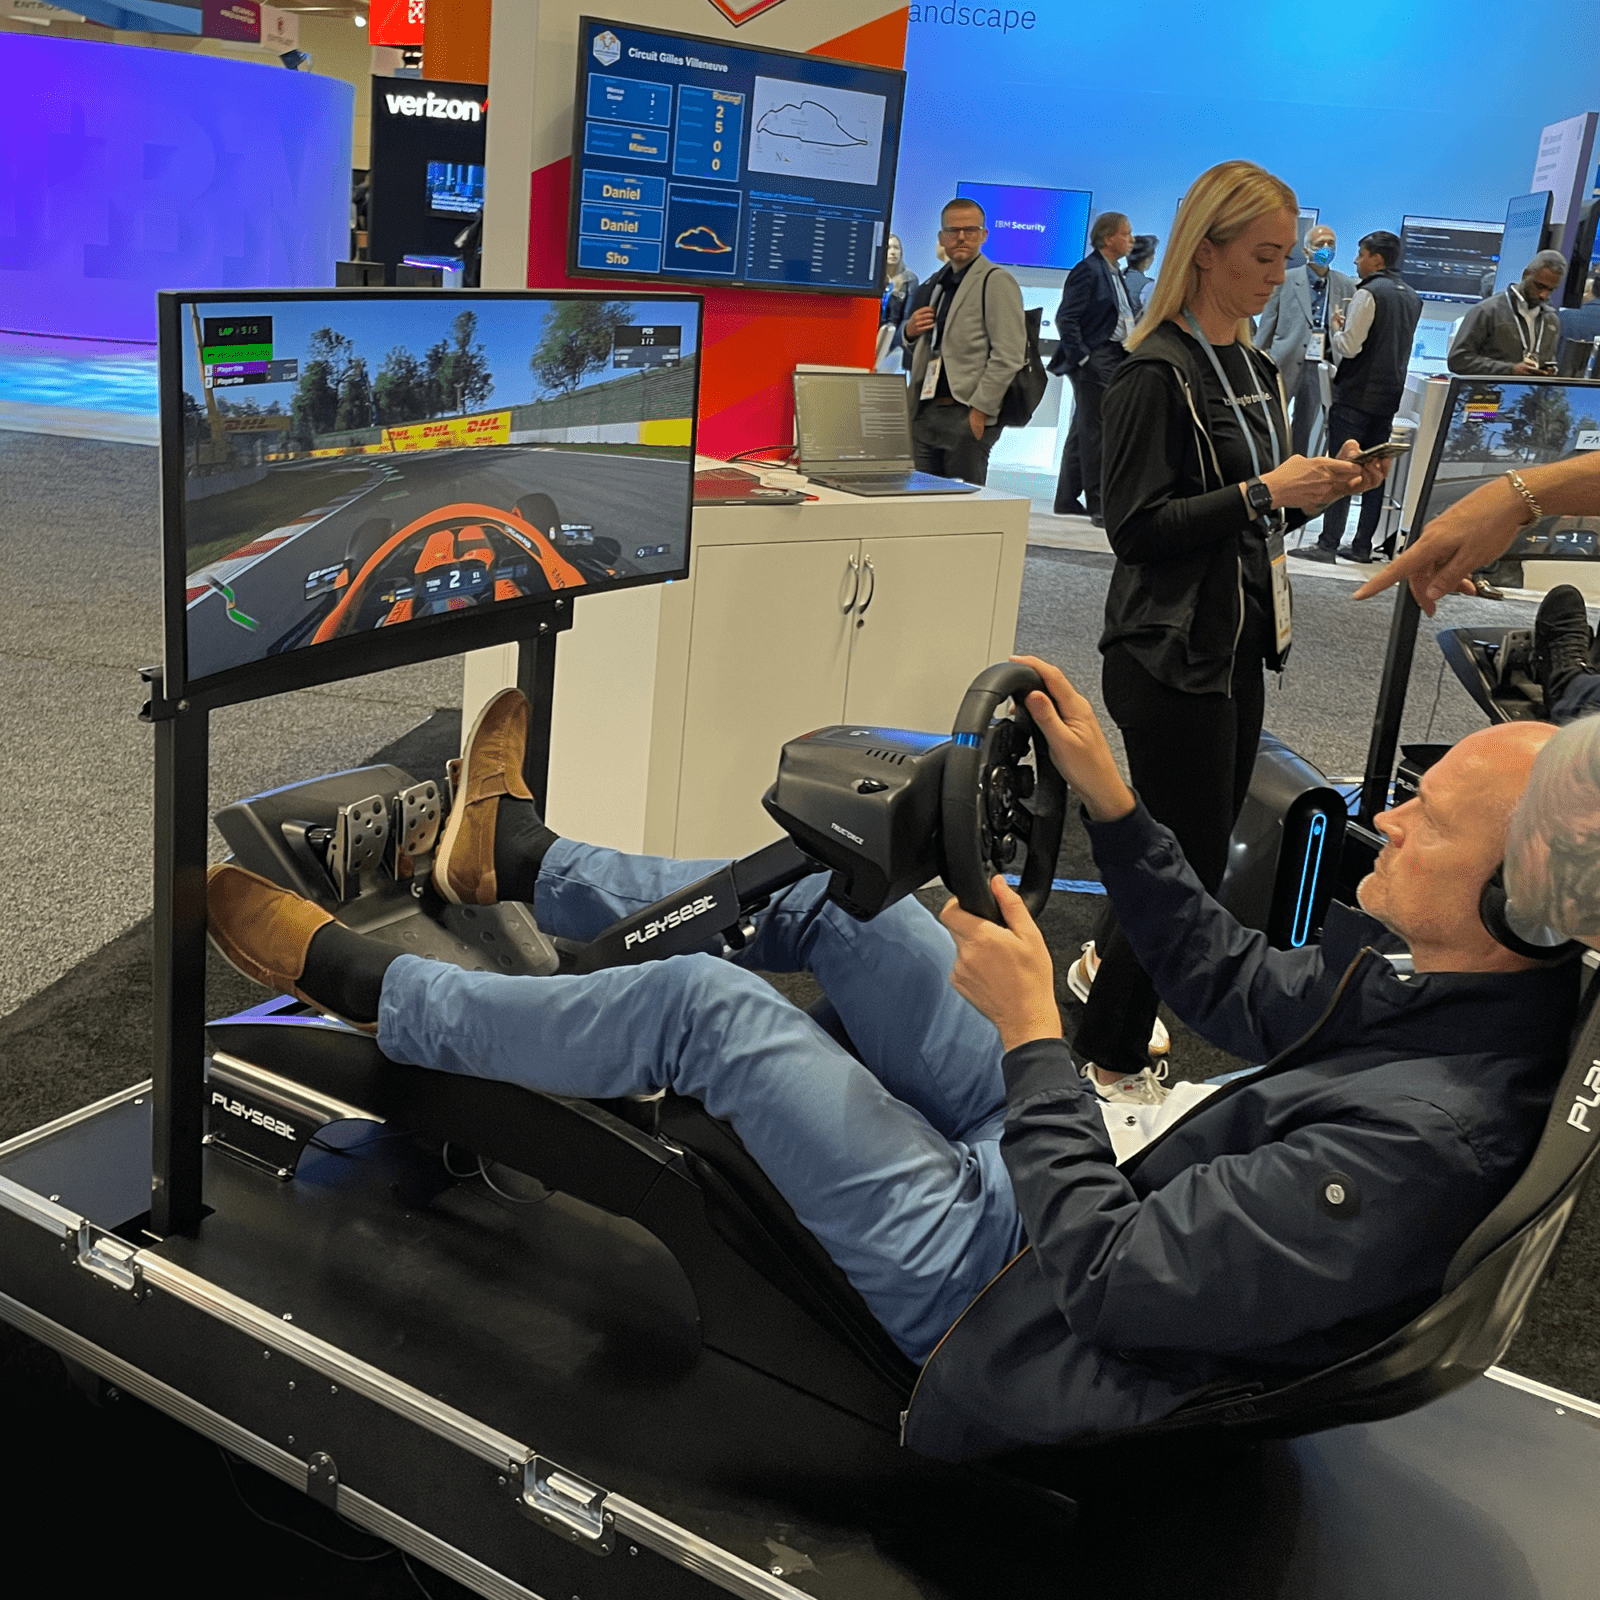 Splunk's driving simulator